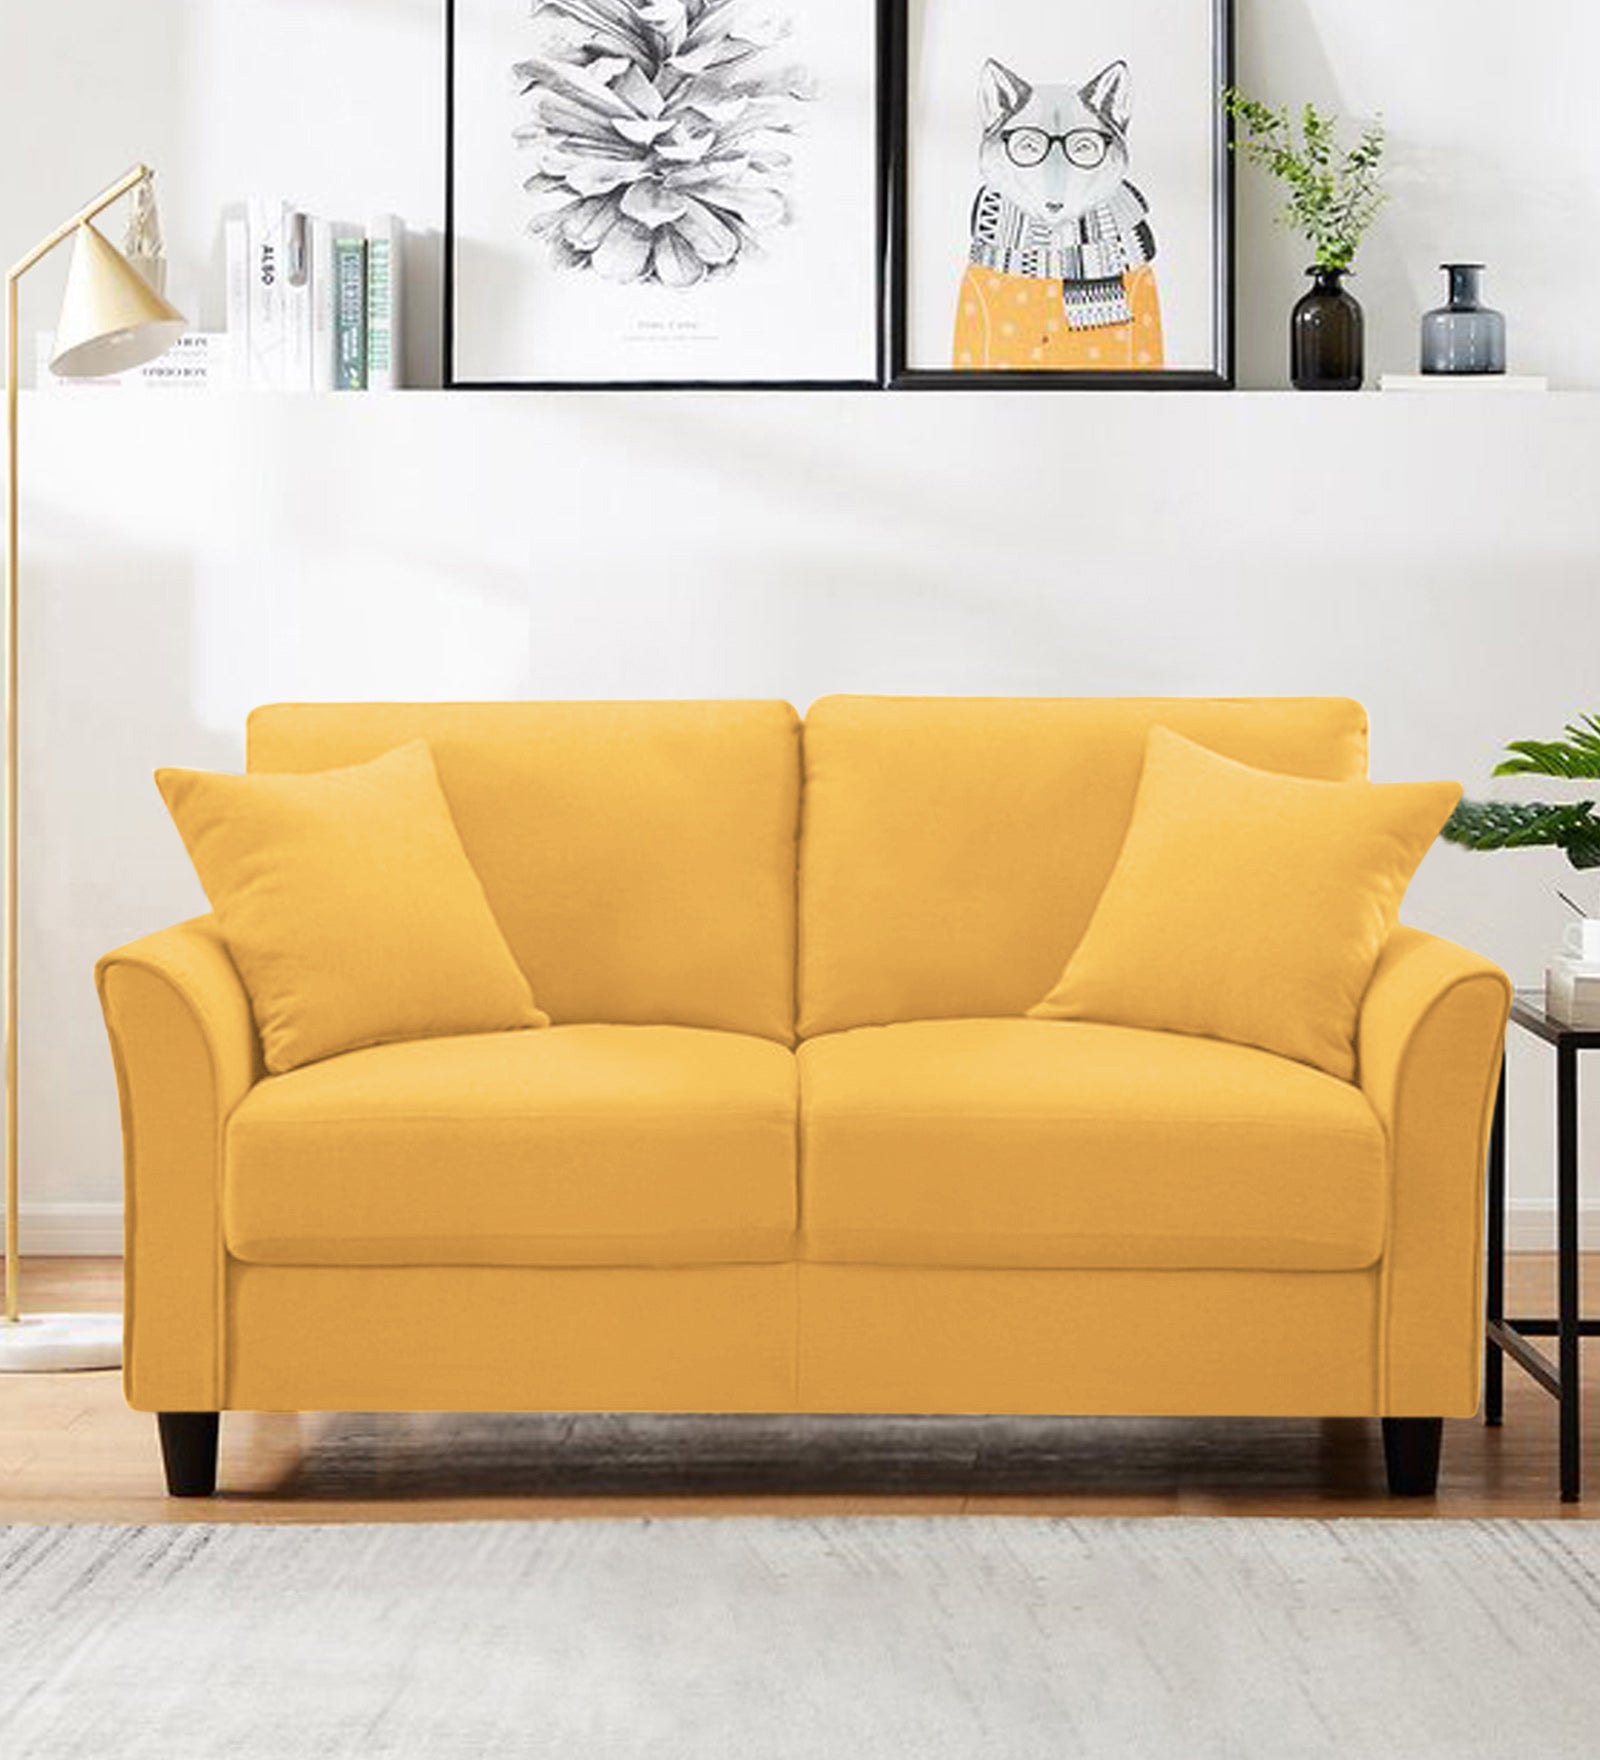 Daroo Velvet 2 Seater Sofa In Turmeric Yellow Colour